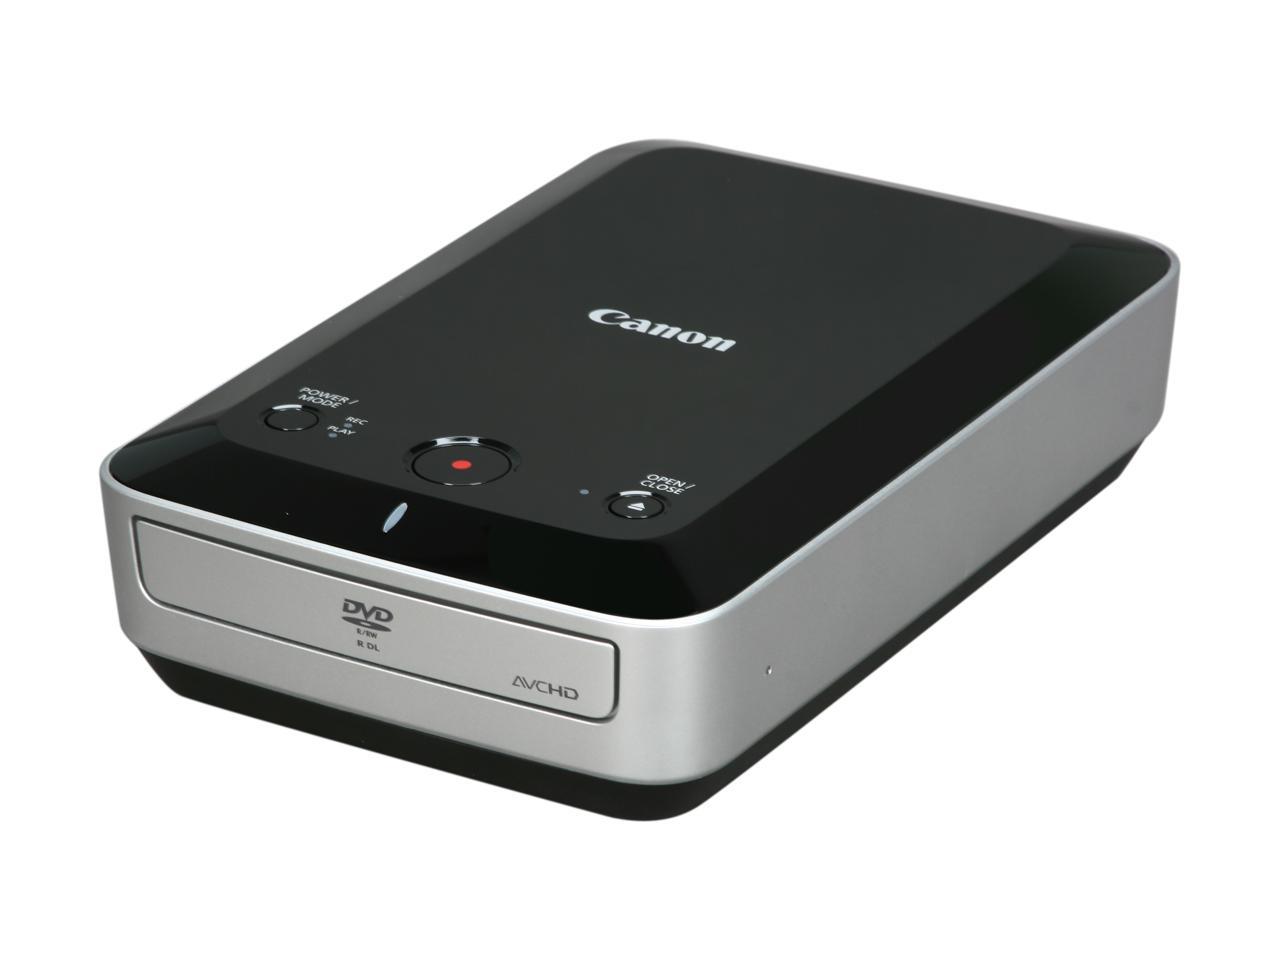 Canon DW-100 DVD Burner and Player - Newegg.com